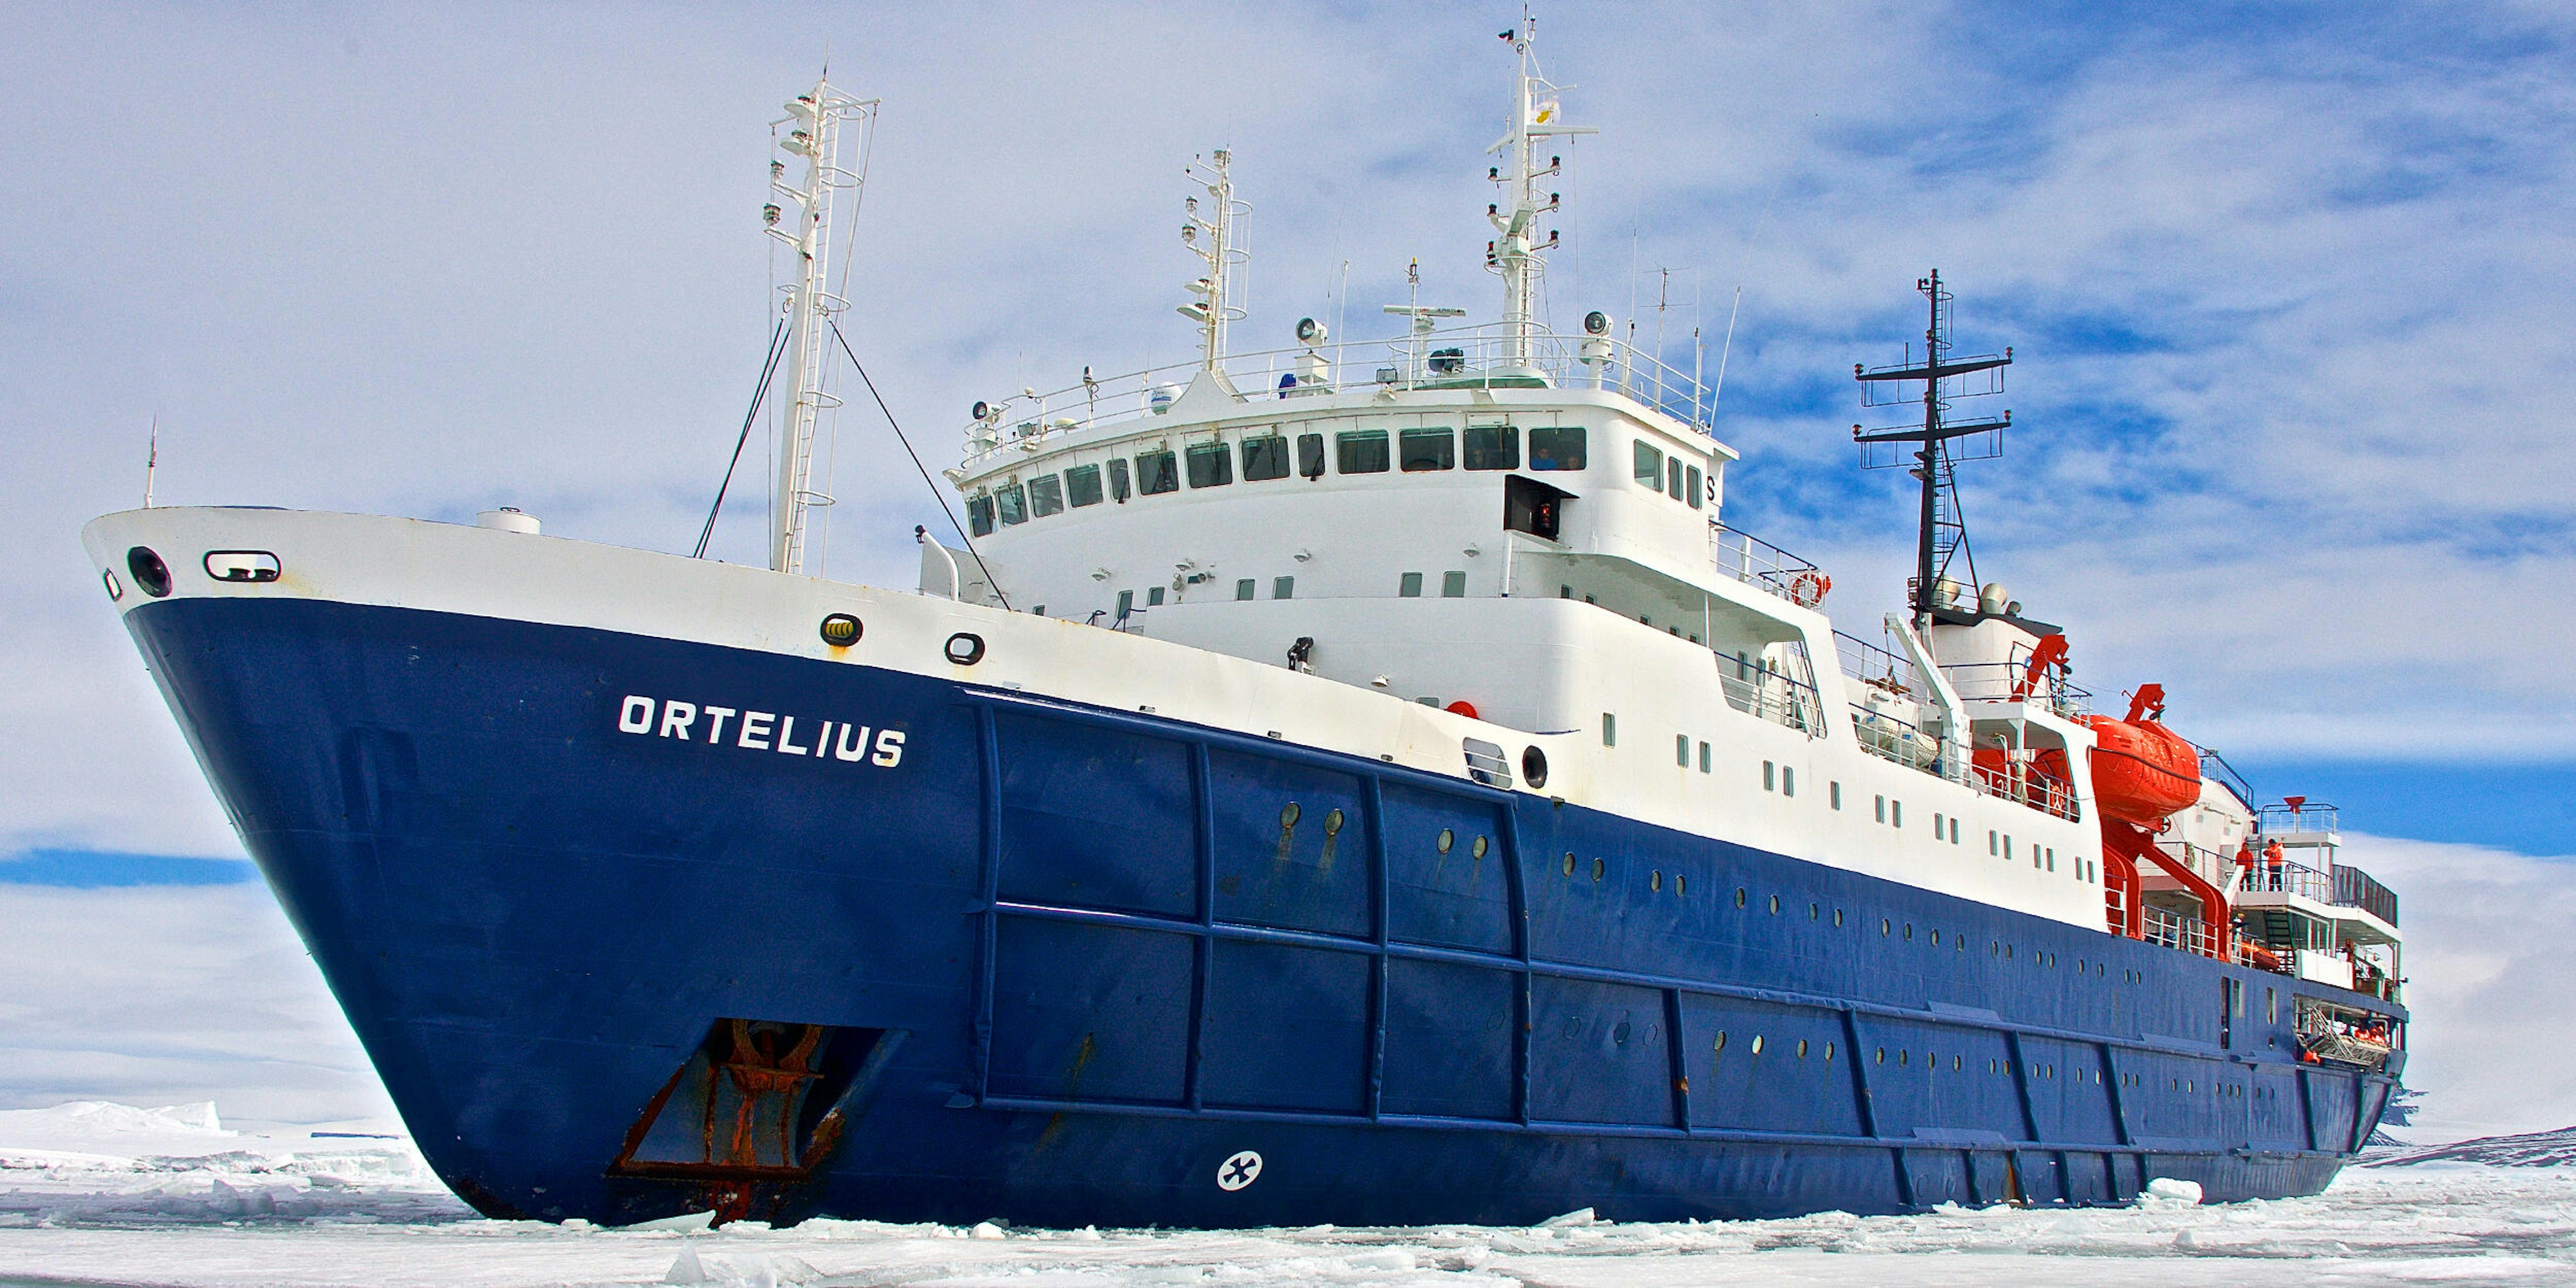 antarctic cruises from australia new zealand